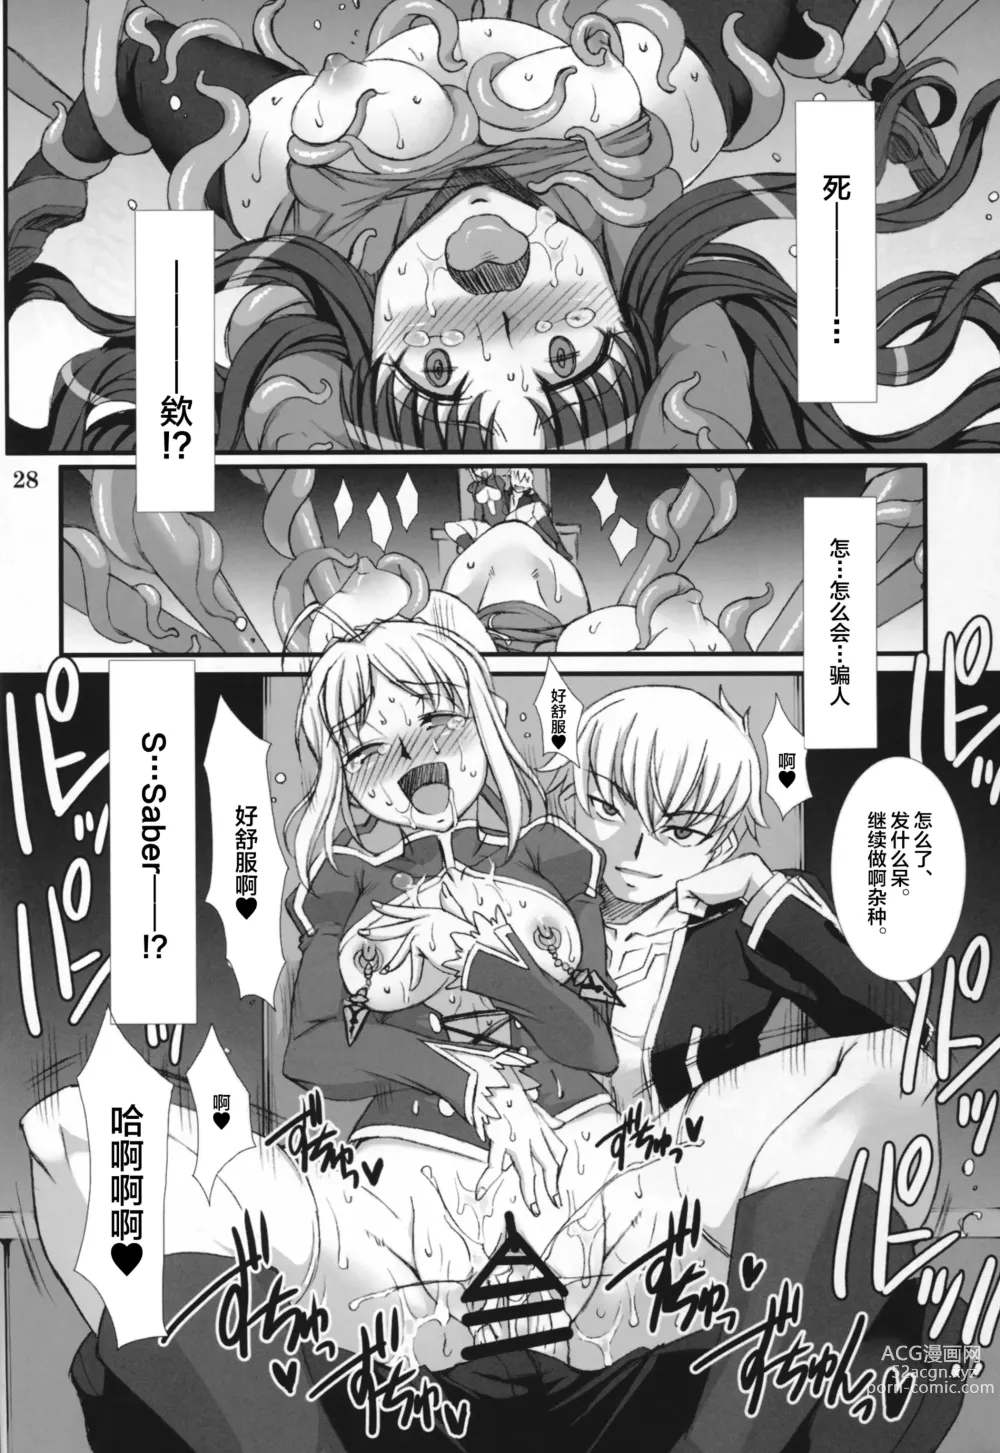 Page 28 of doujinshi Rin Kai -Kegasareta Aka-